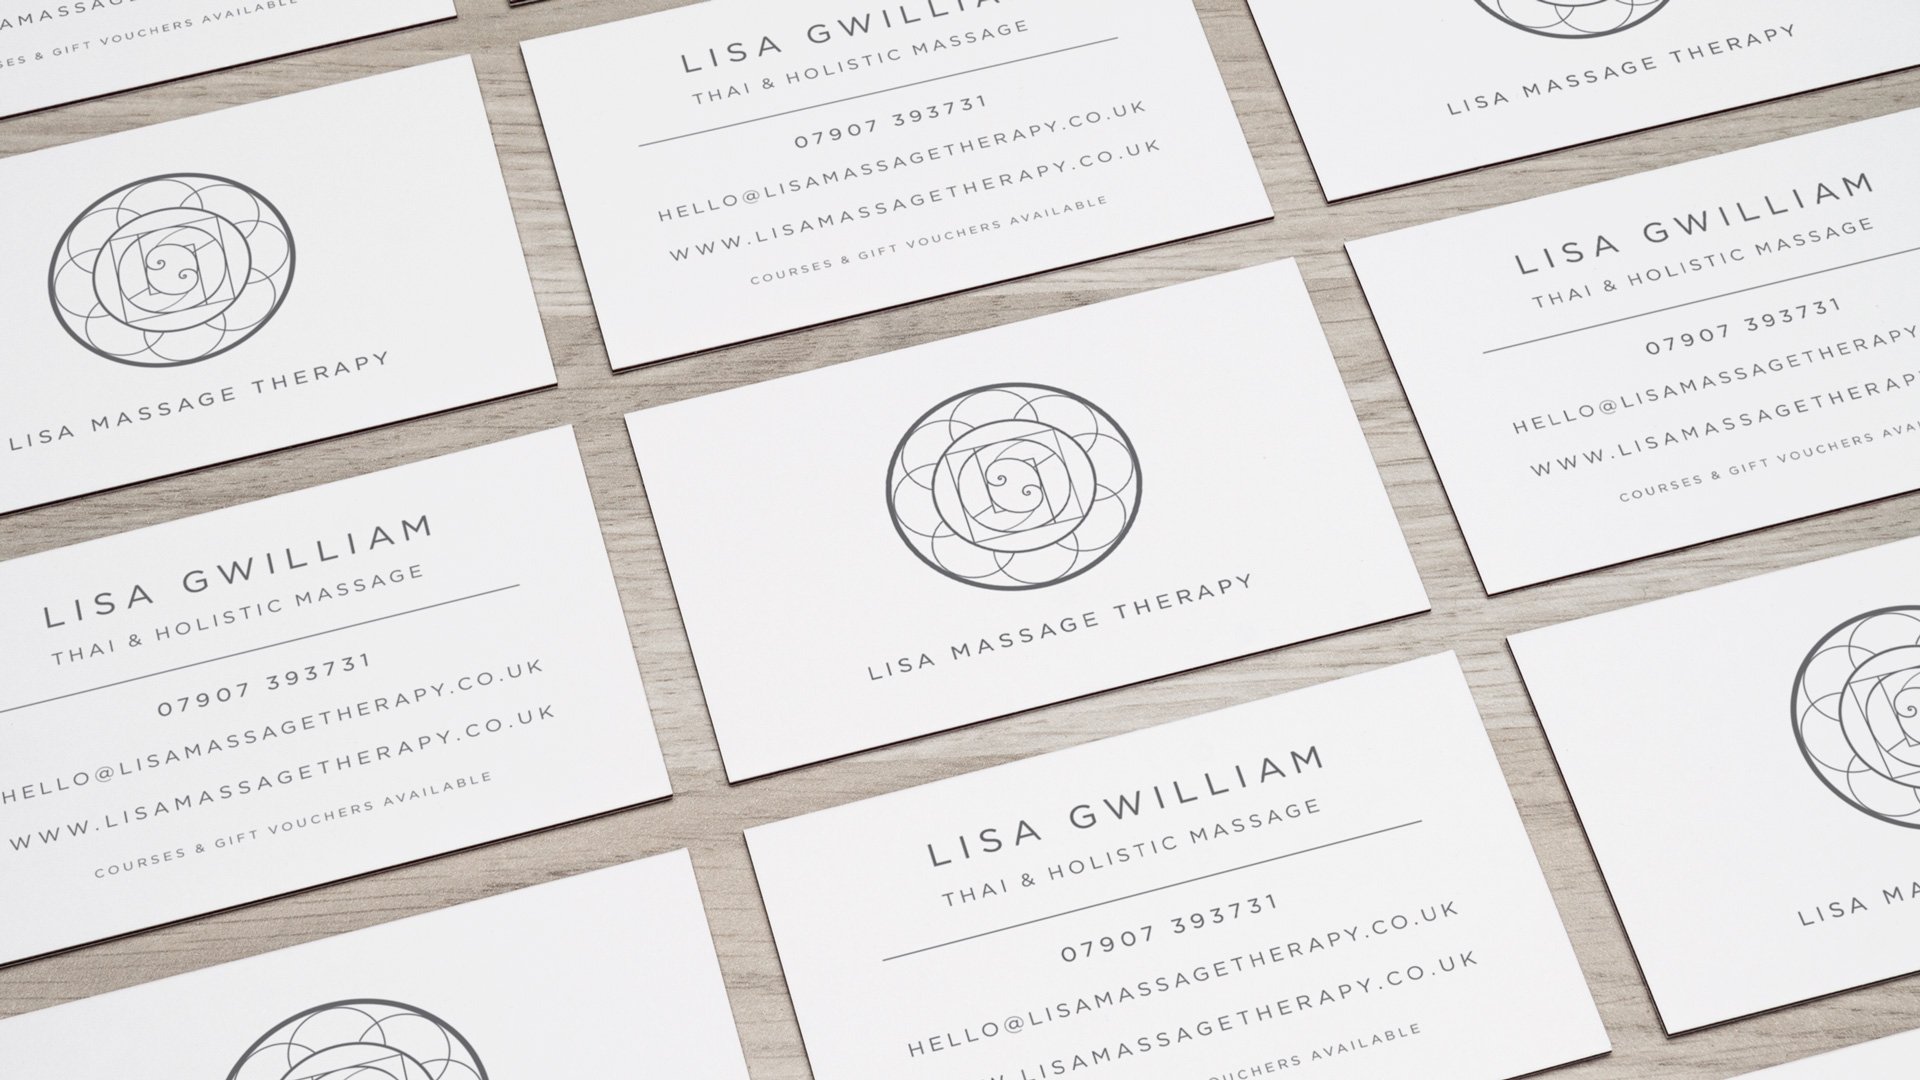 Lisa-Gwilliam-Massage-Business-Card-02.jpg